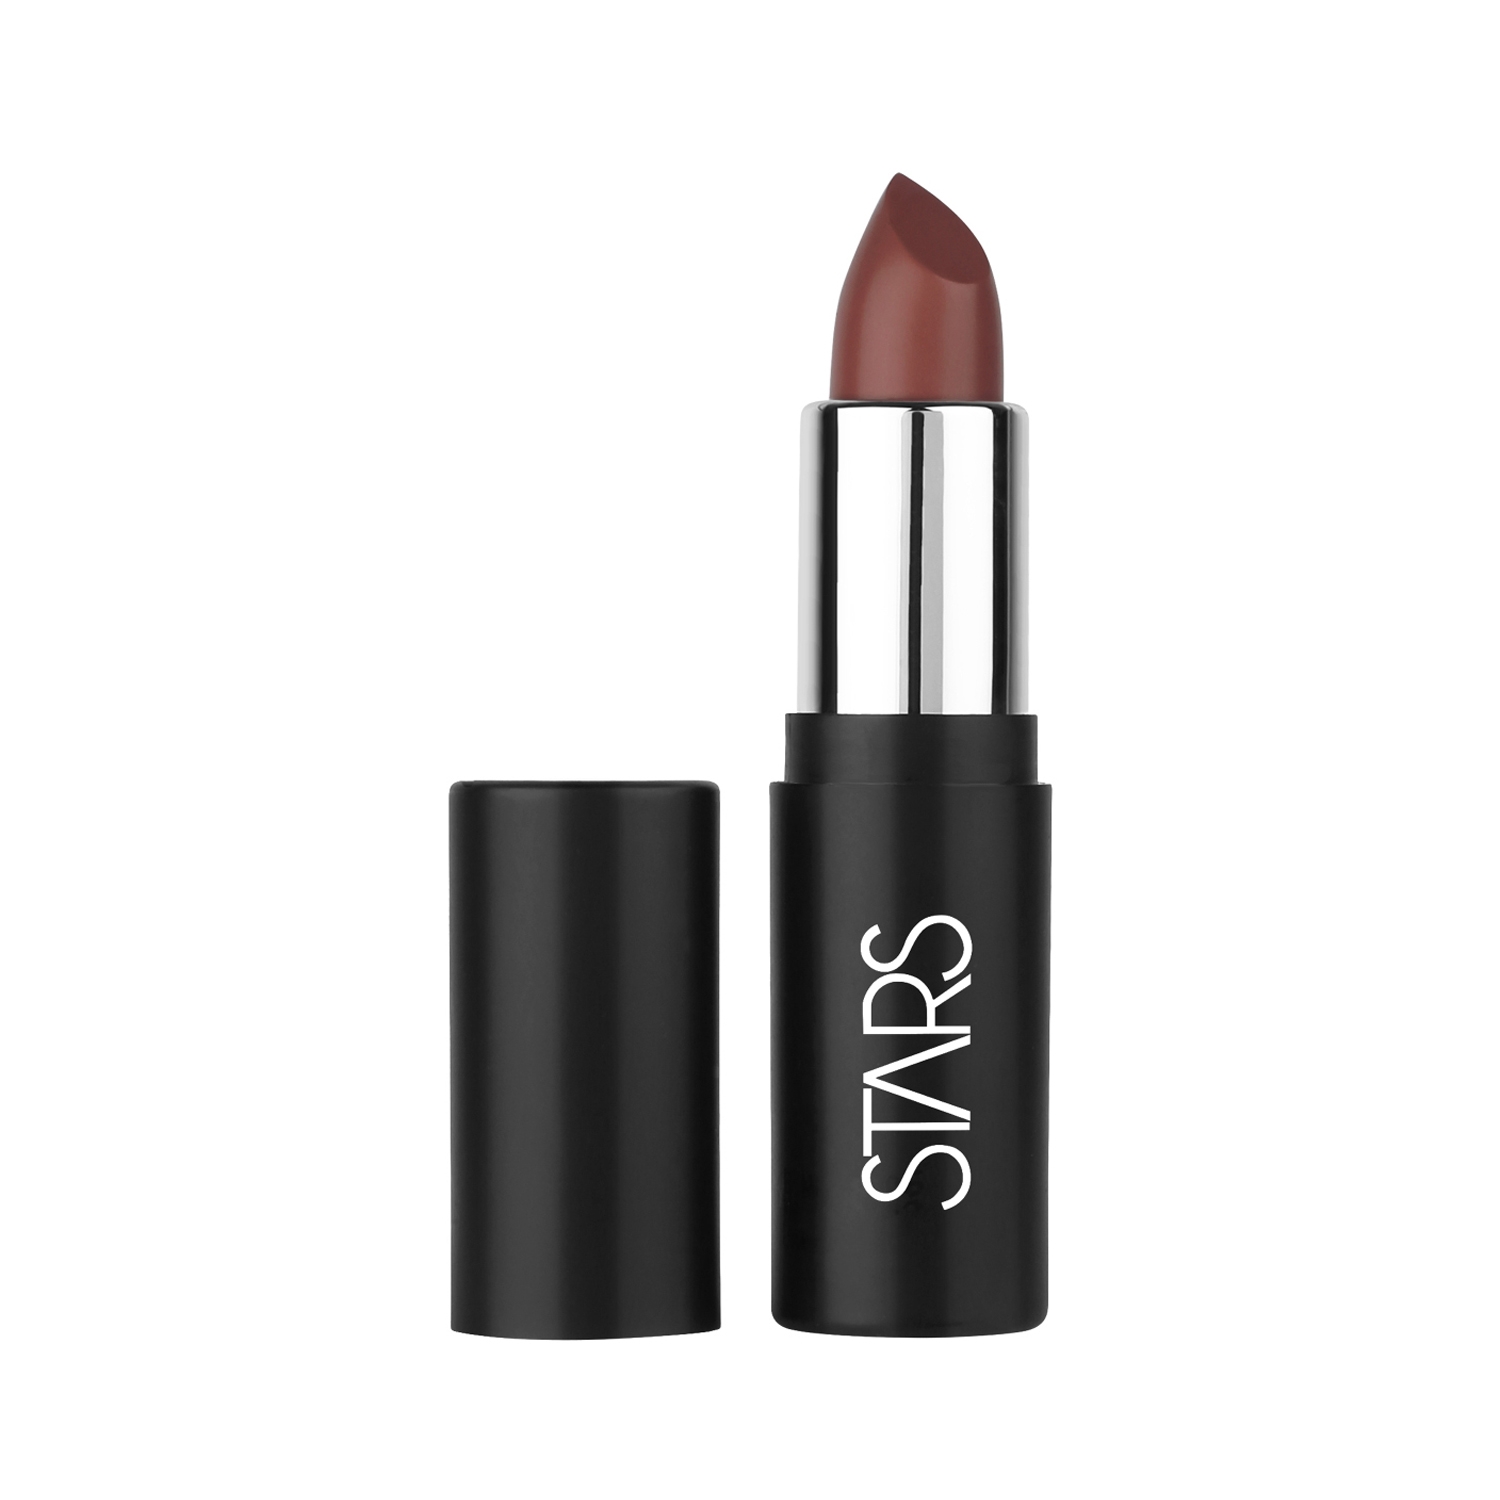 Stars Cosmetics | Stars Cosmetics Lush Lips Soft Creamy Lipstick - 08 Burgundy Brown (4.2g)